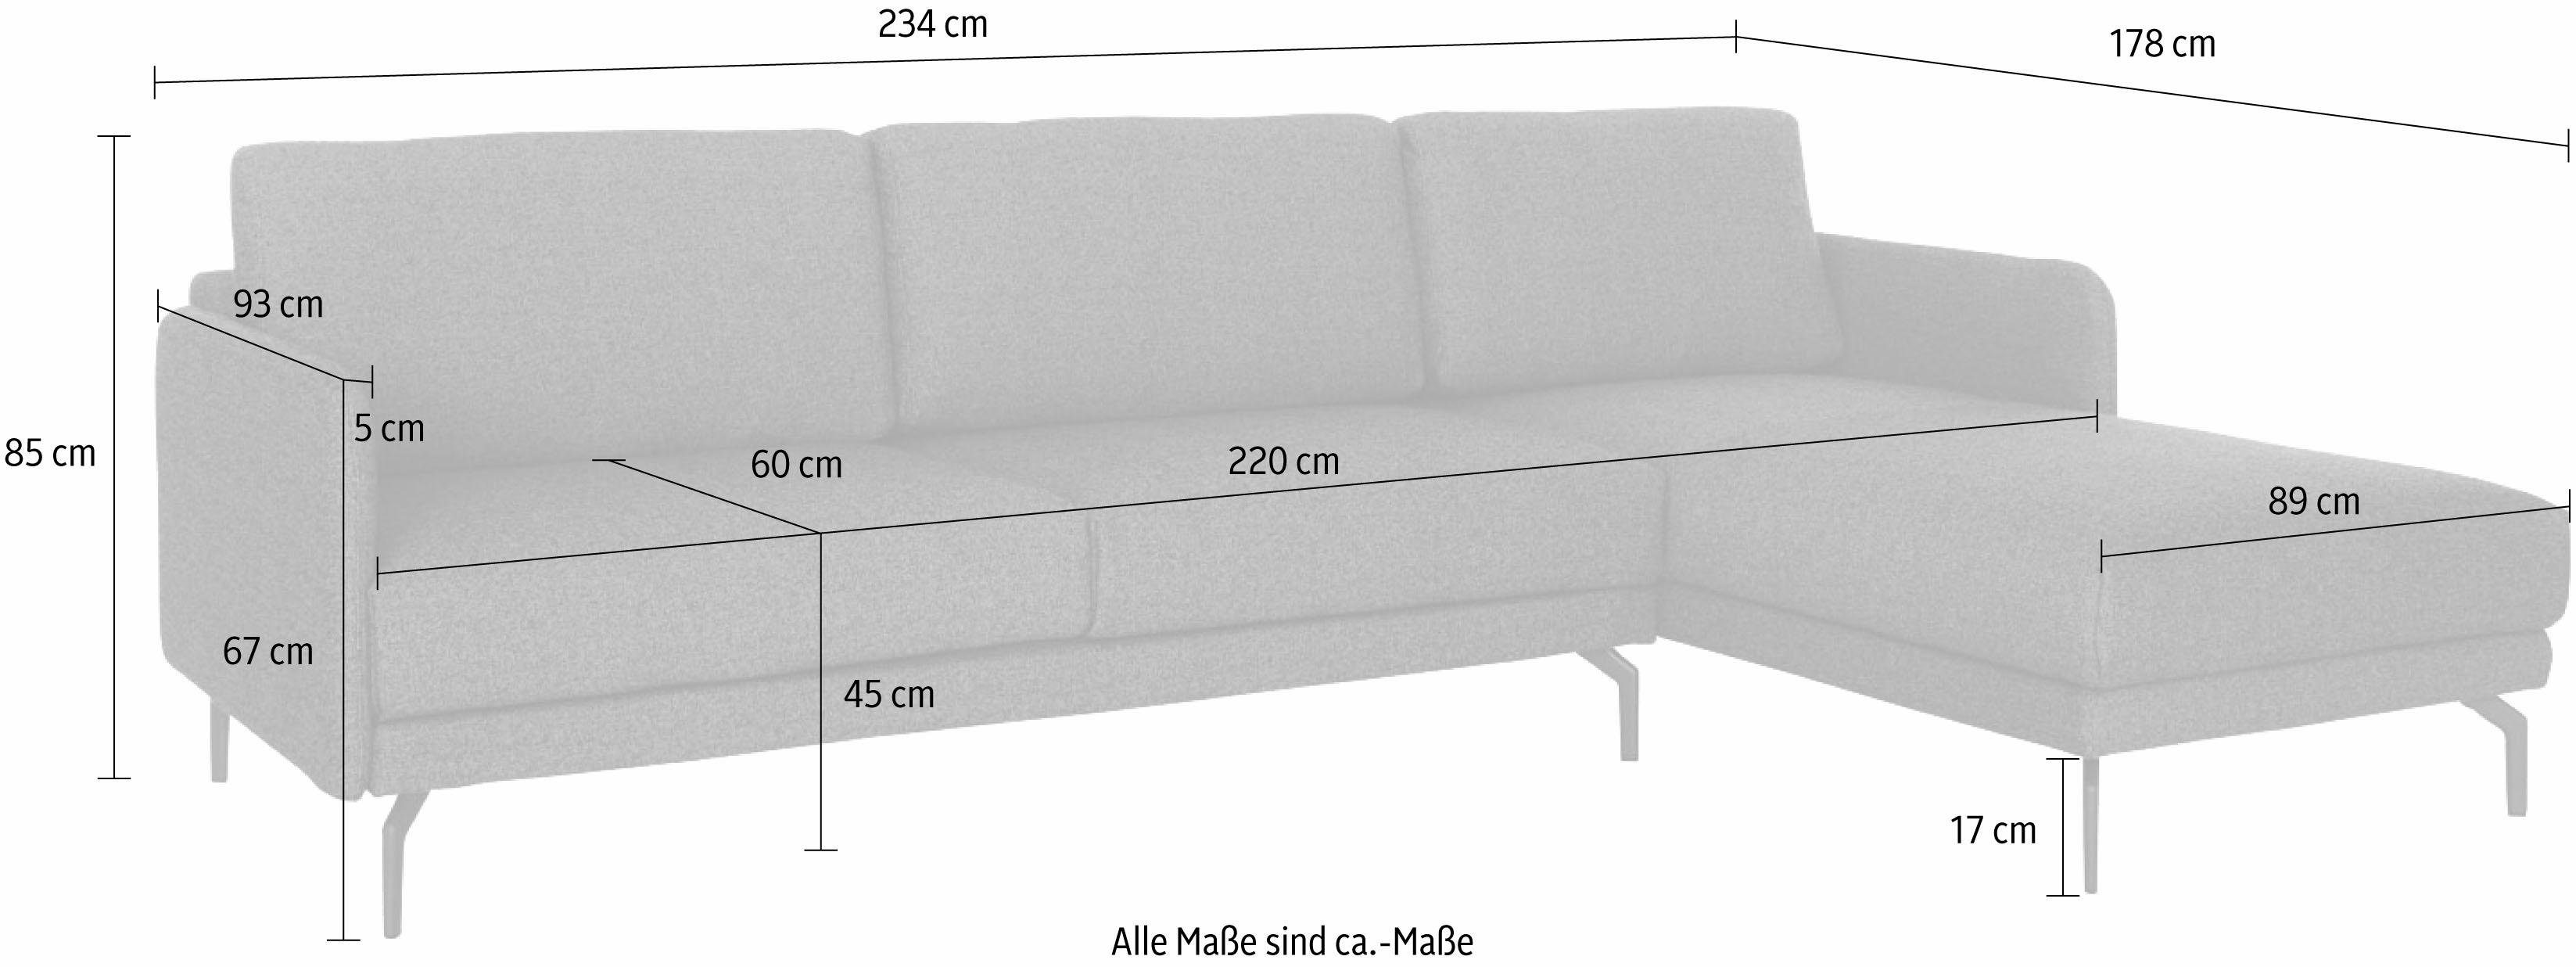 hülsta 234 Breite hs.450, Armlehne Alugussfüße sofa in umbragrau sehr cm, Ecksofa schmal,